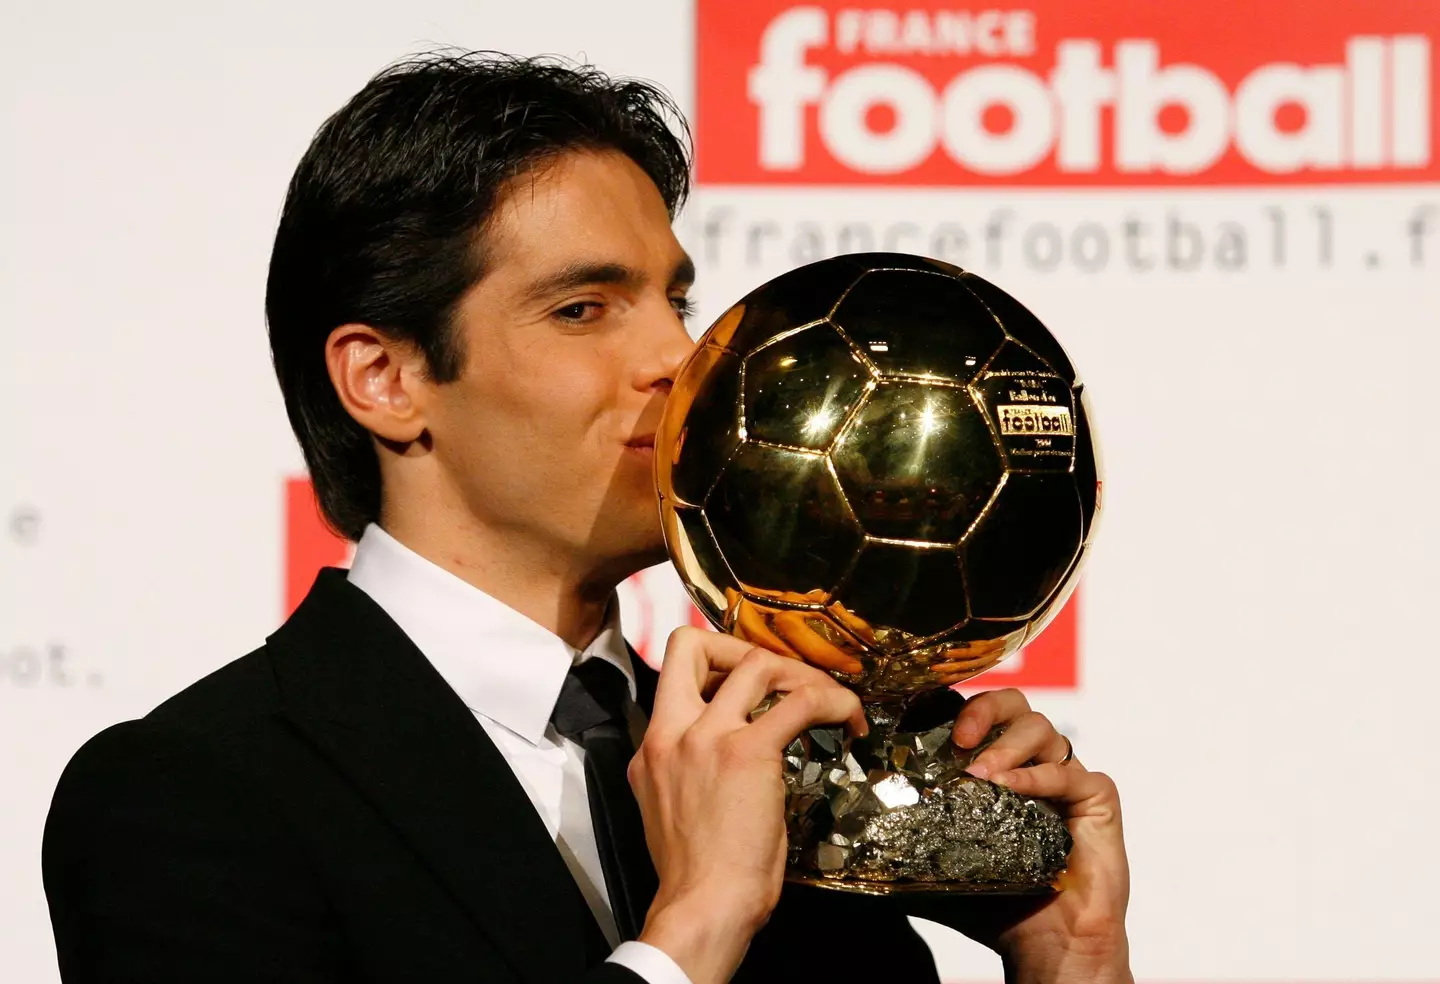 Former AC Milan playmaker Kaka lifted the 2007 Ballon d’Or award.